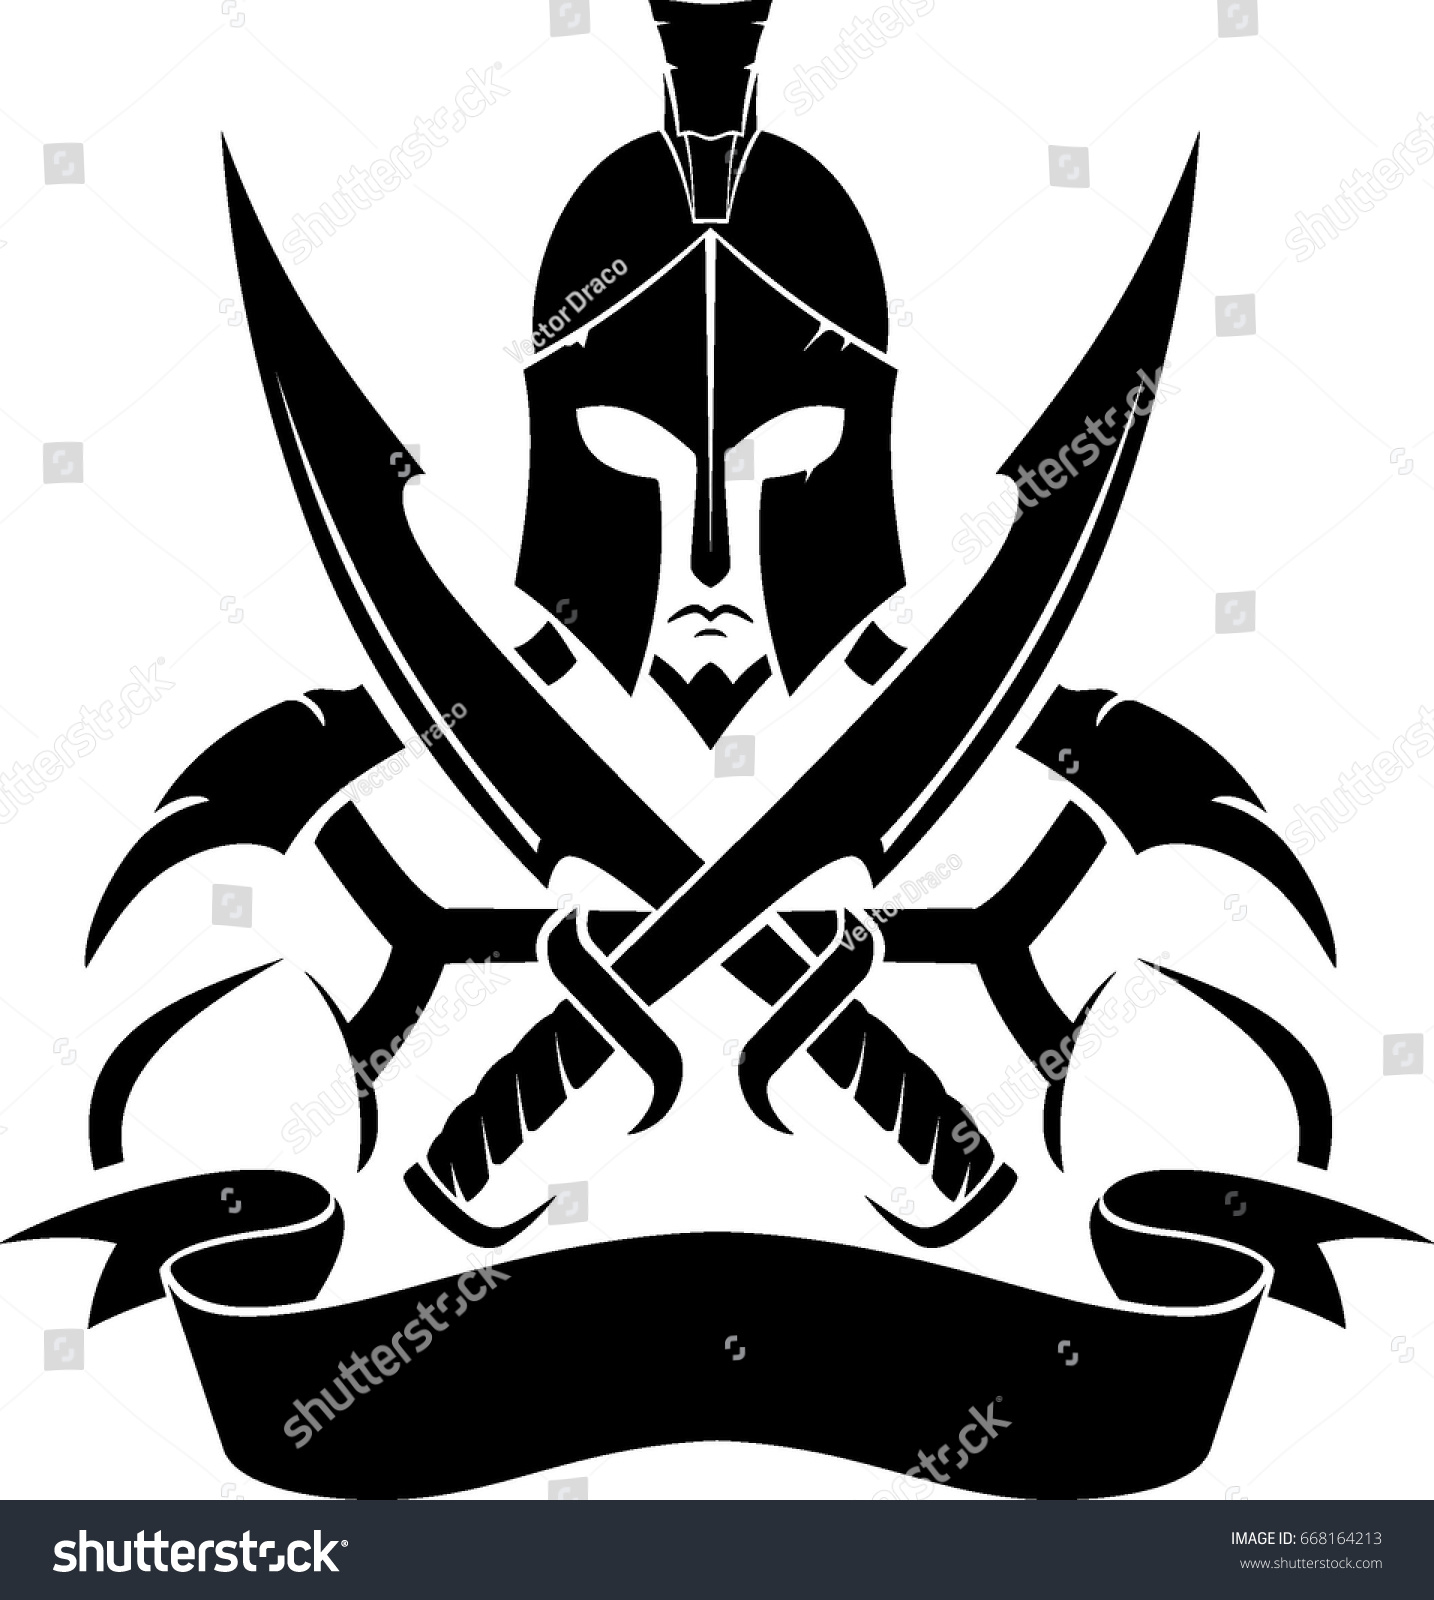 Spartan Sword Insignia Stock Vector (Royalty Free) 668164213 - Shutterstock